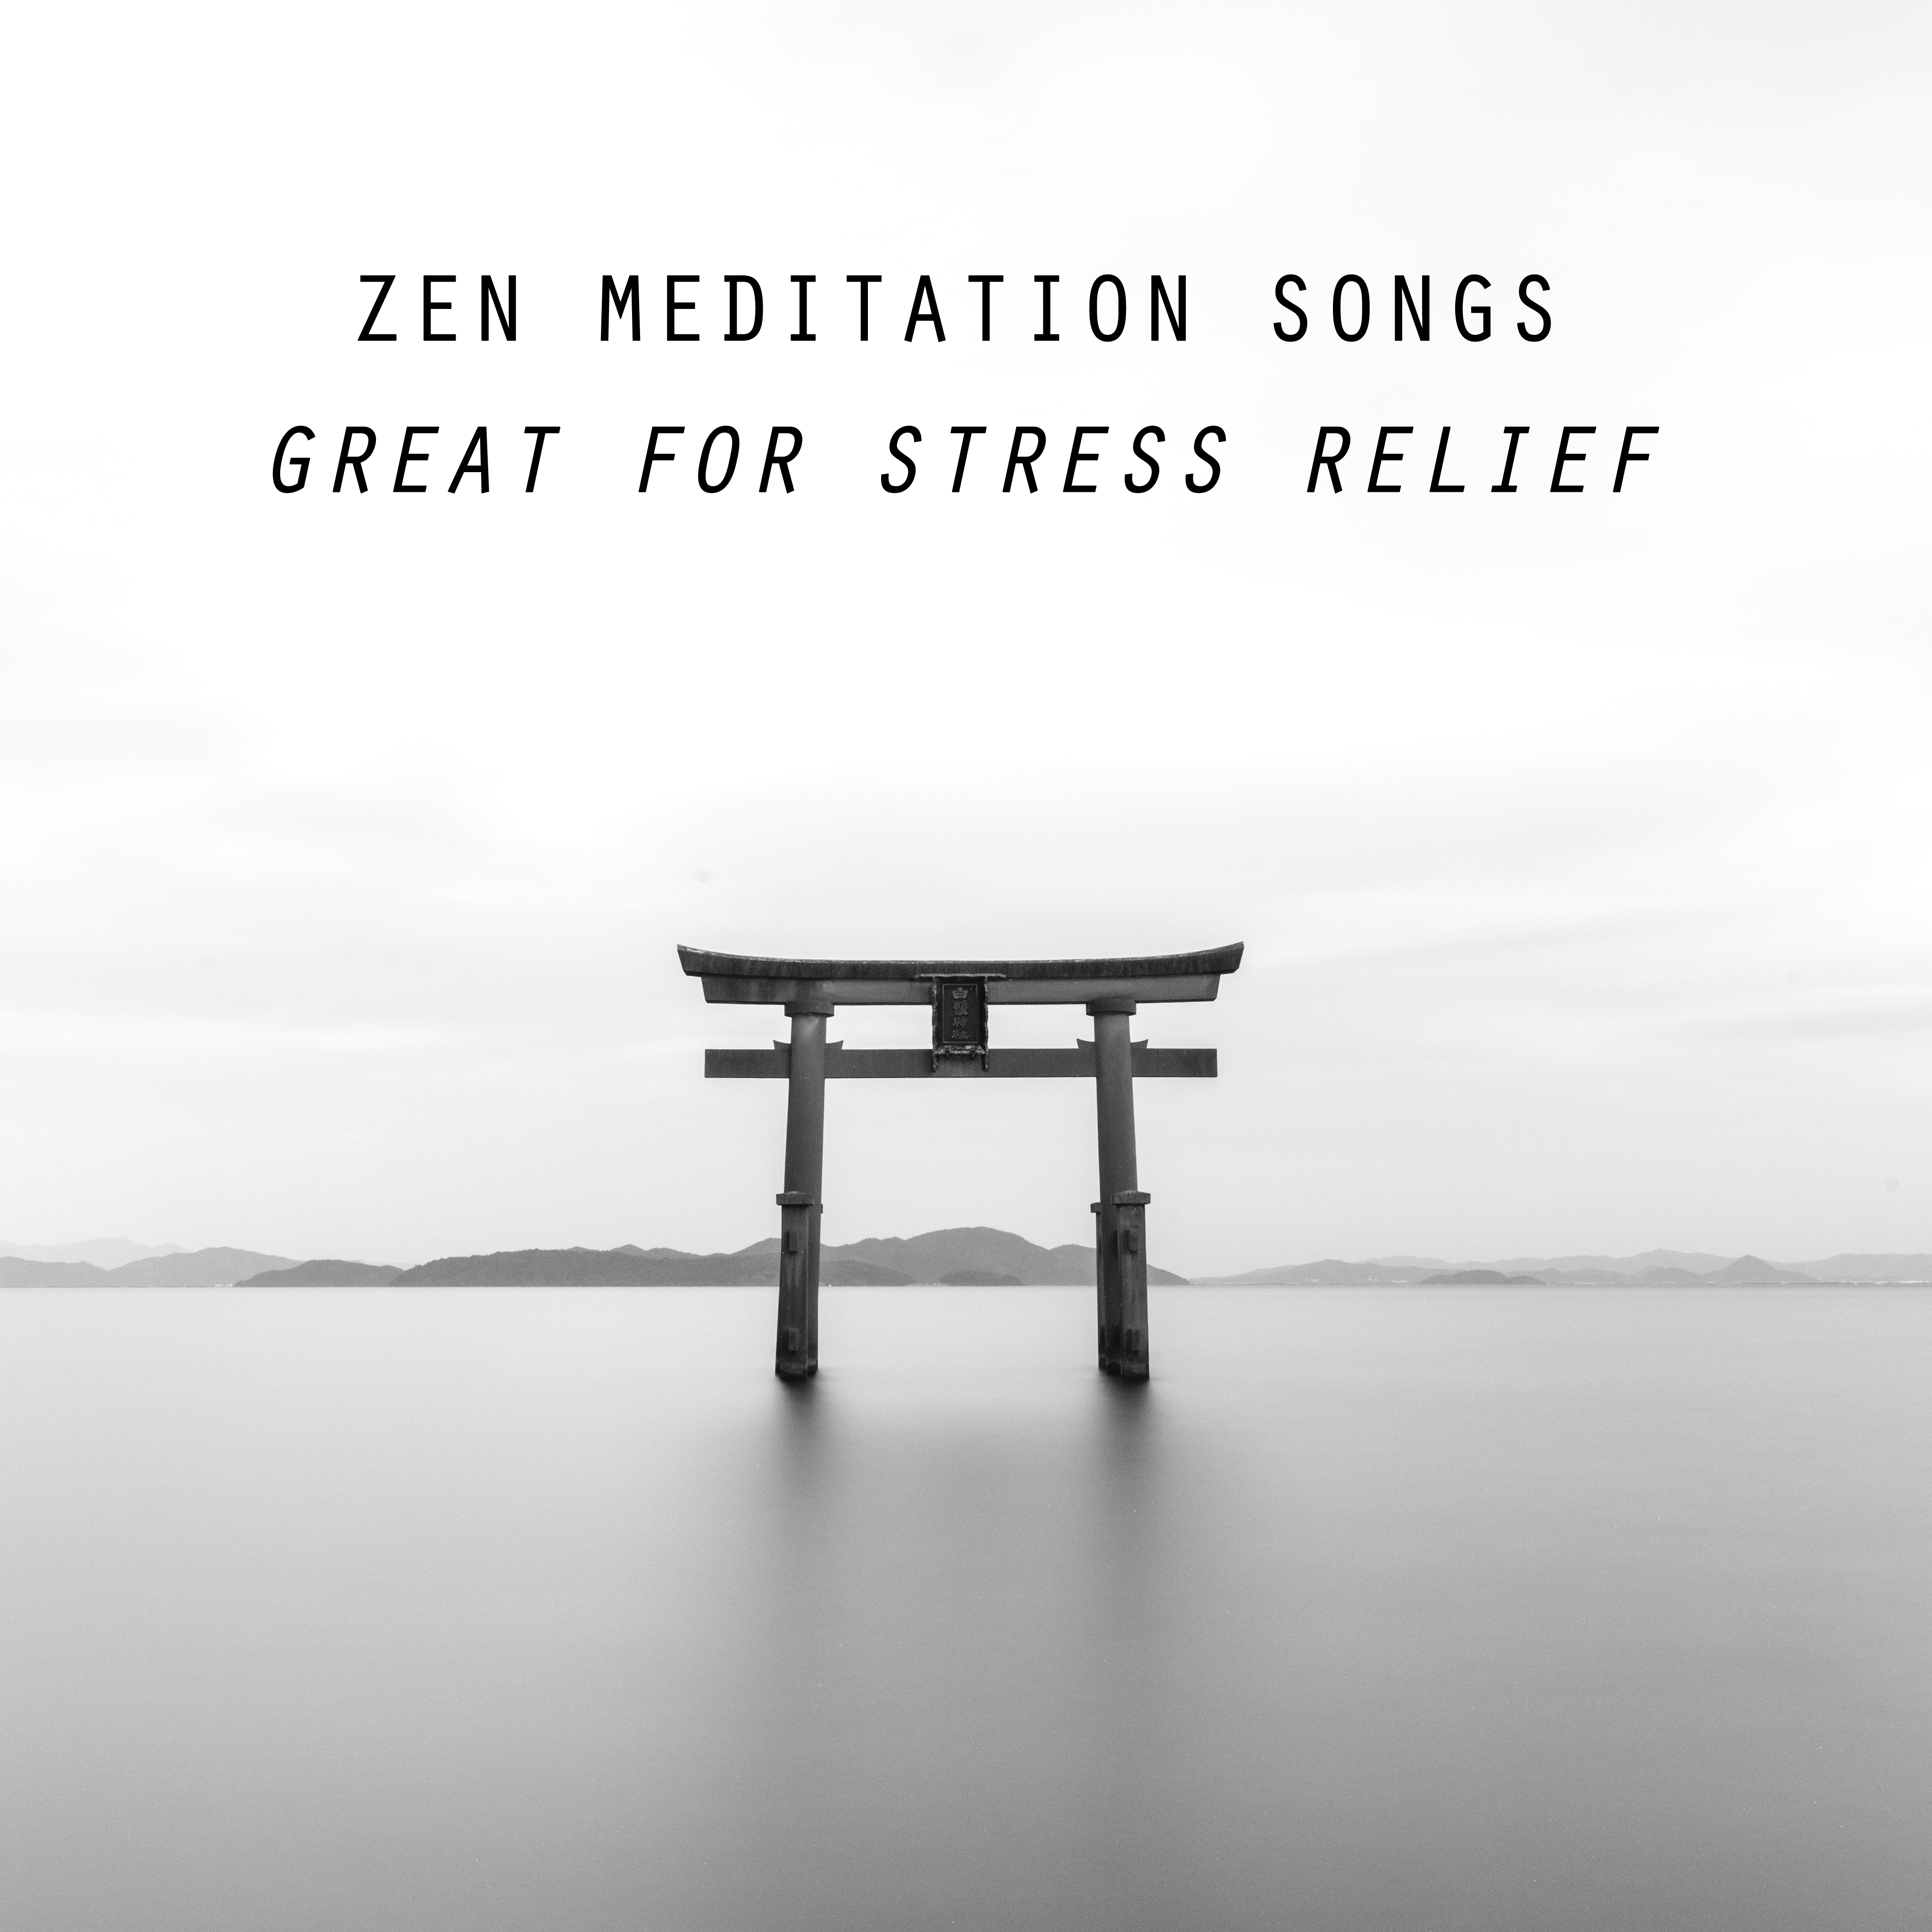 12 Zen Meditation Songs: Great for Stress Relief